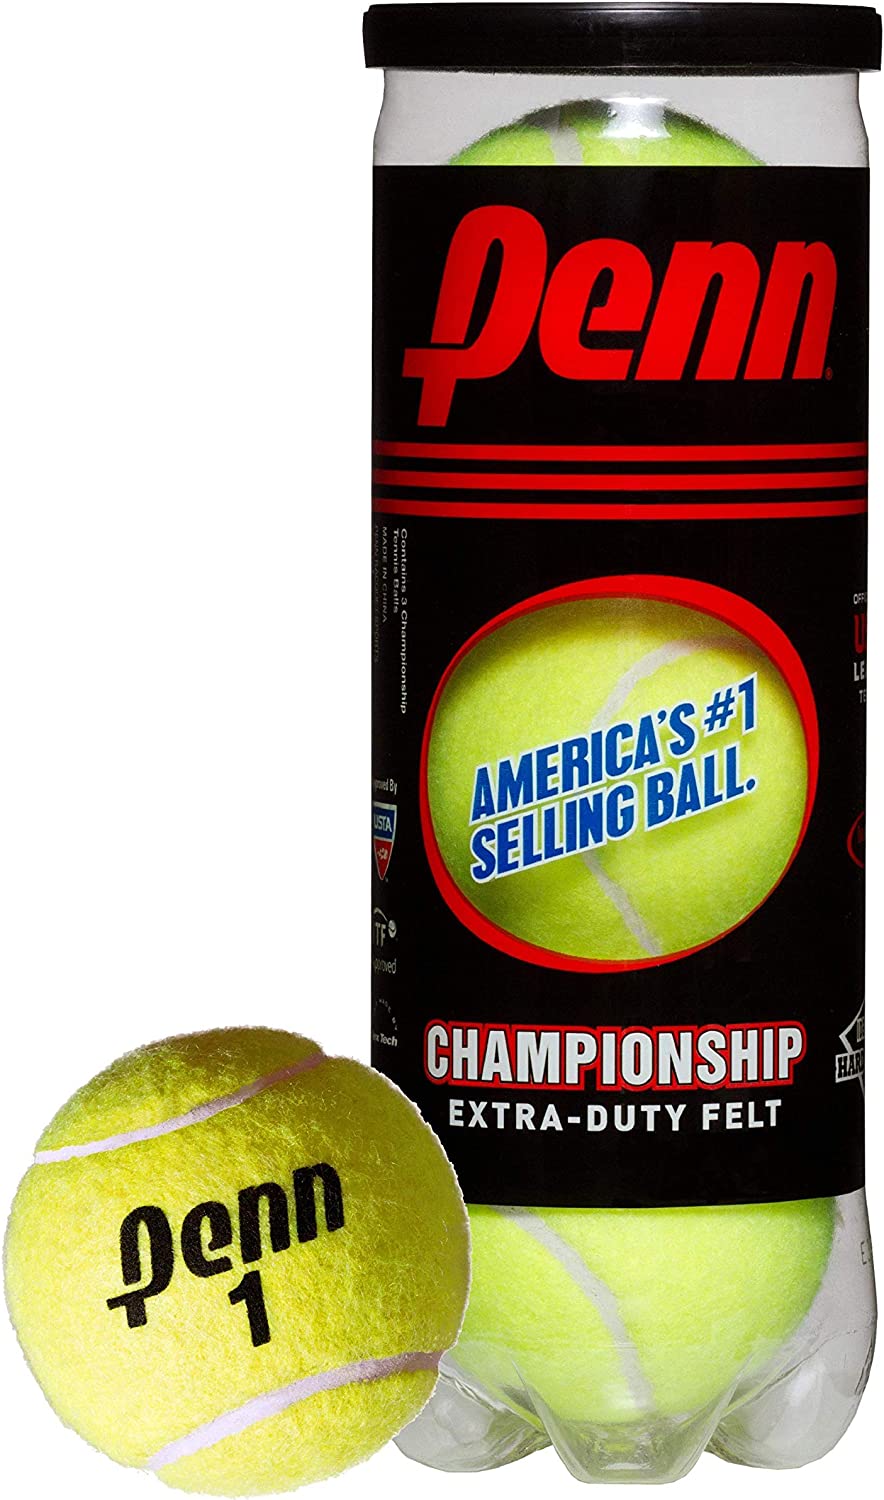 Penn Championship Extra Duty Felt Tennis Balls - 3 Pack